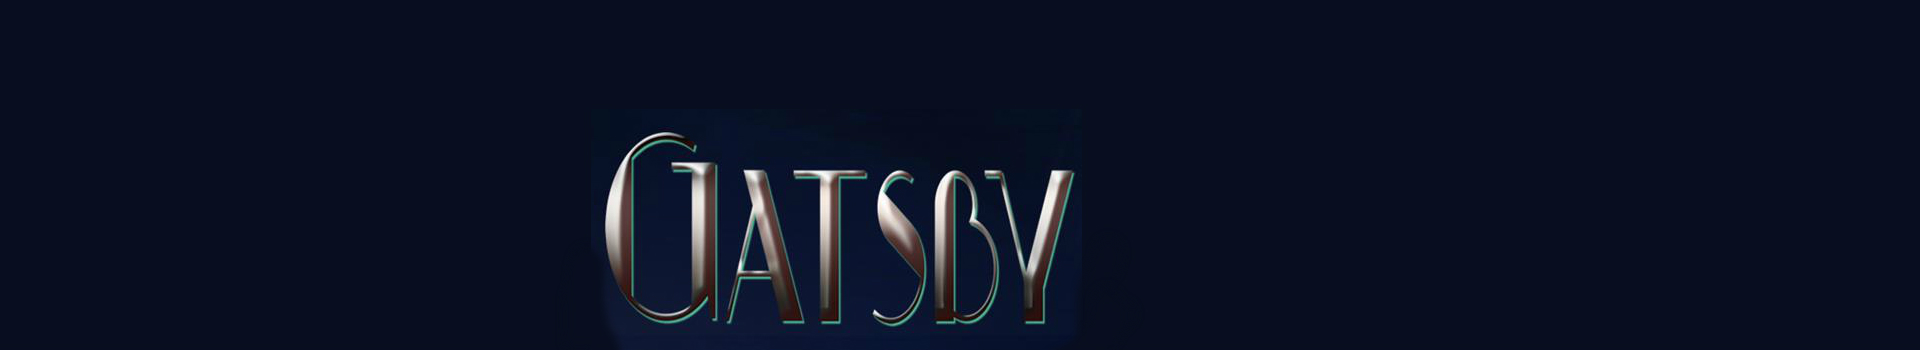 Gatsby tickets London Arts Theatre